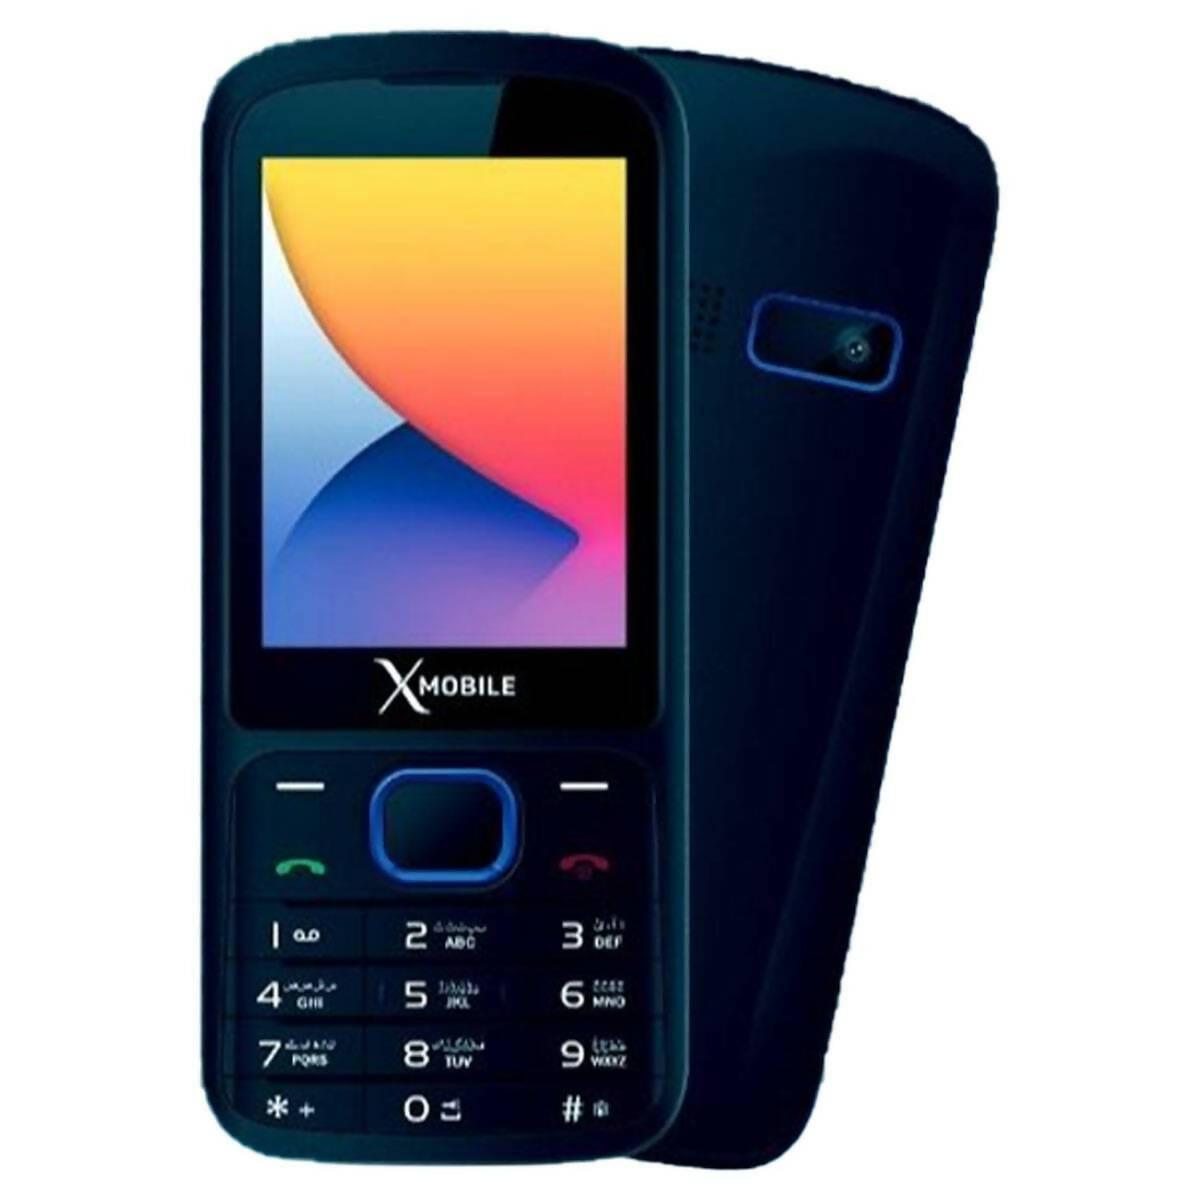 XMobile X4i - Dual Sim - 2.4 screen - smart camera - Wireless FM - PTA Approved - ValueBox